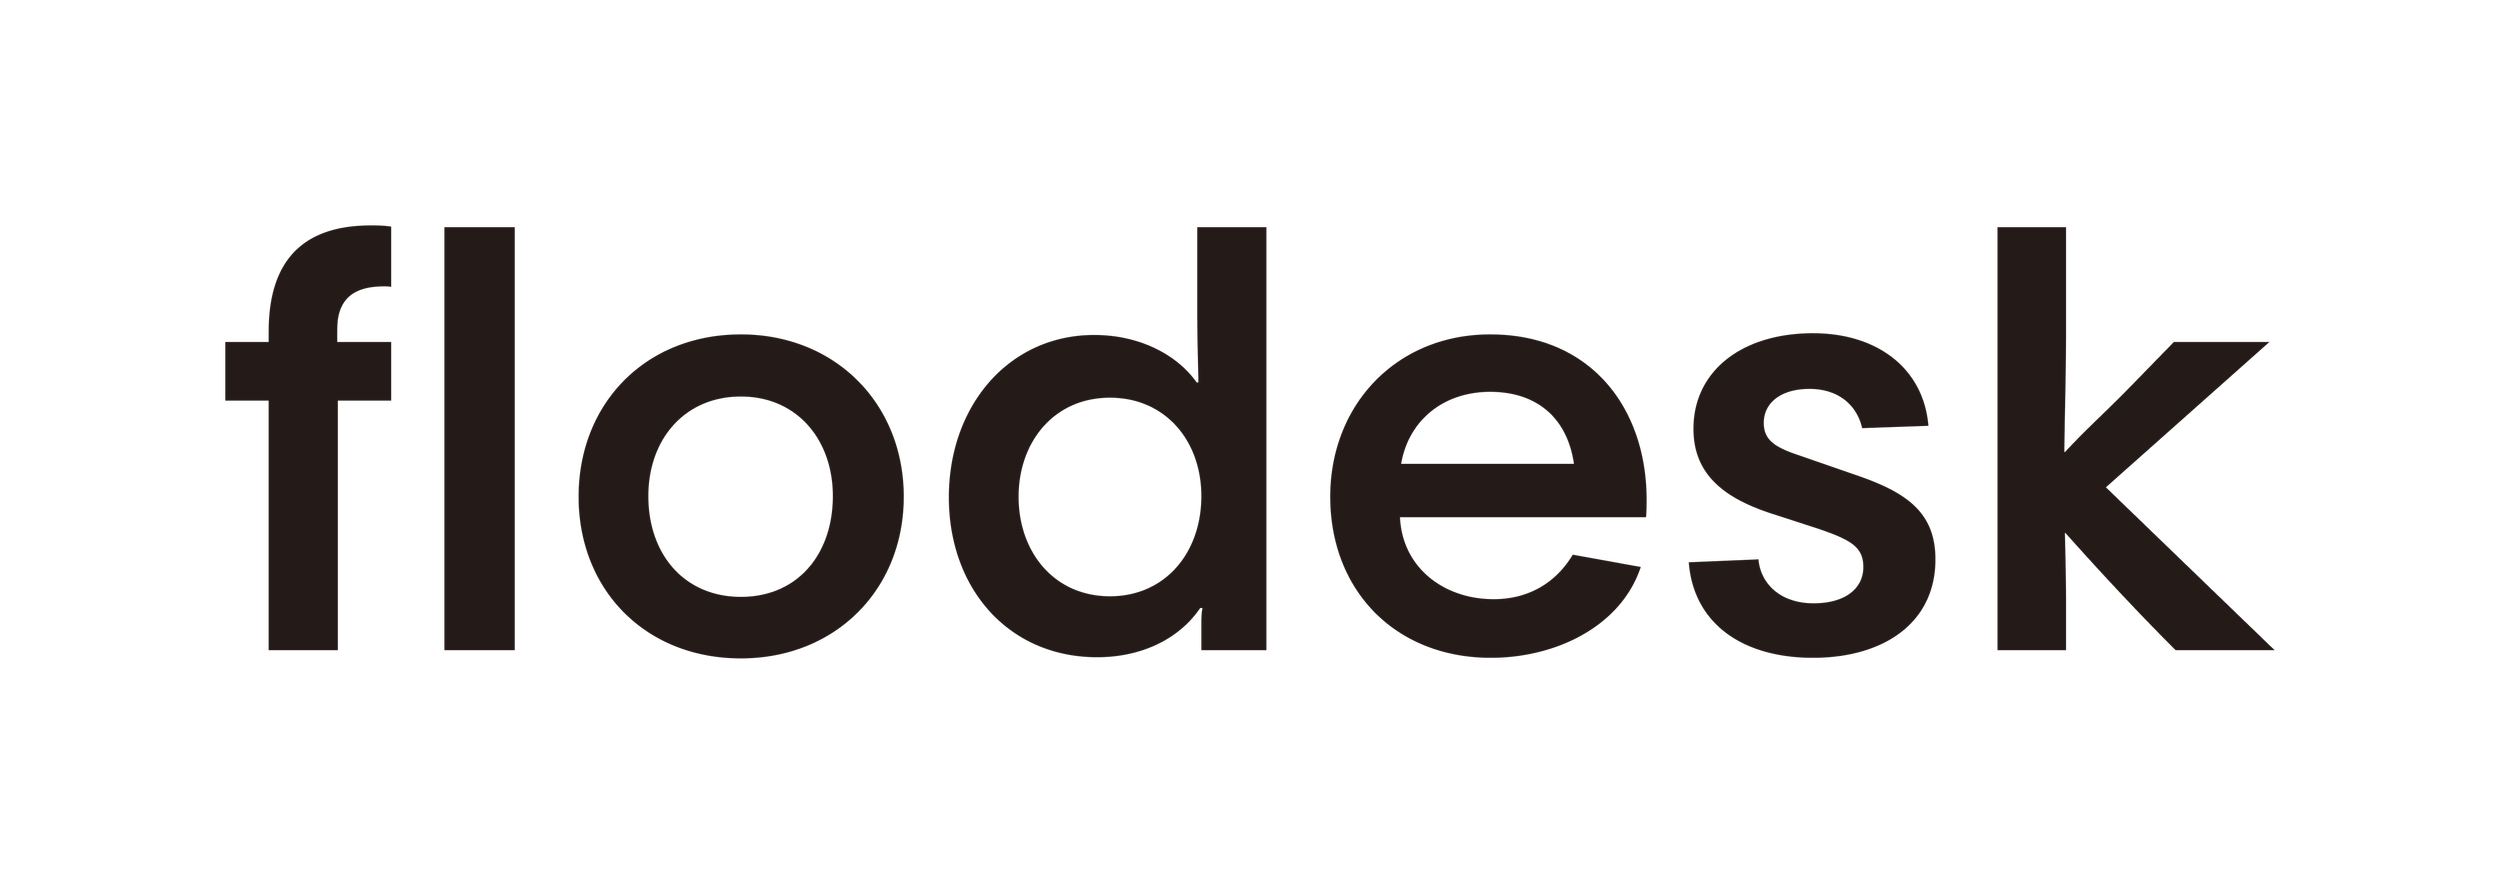 Flodesk_Logotype.png